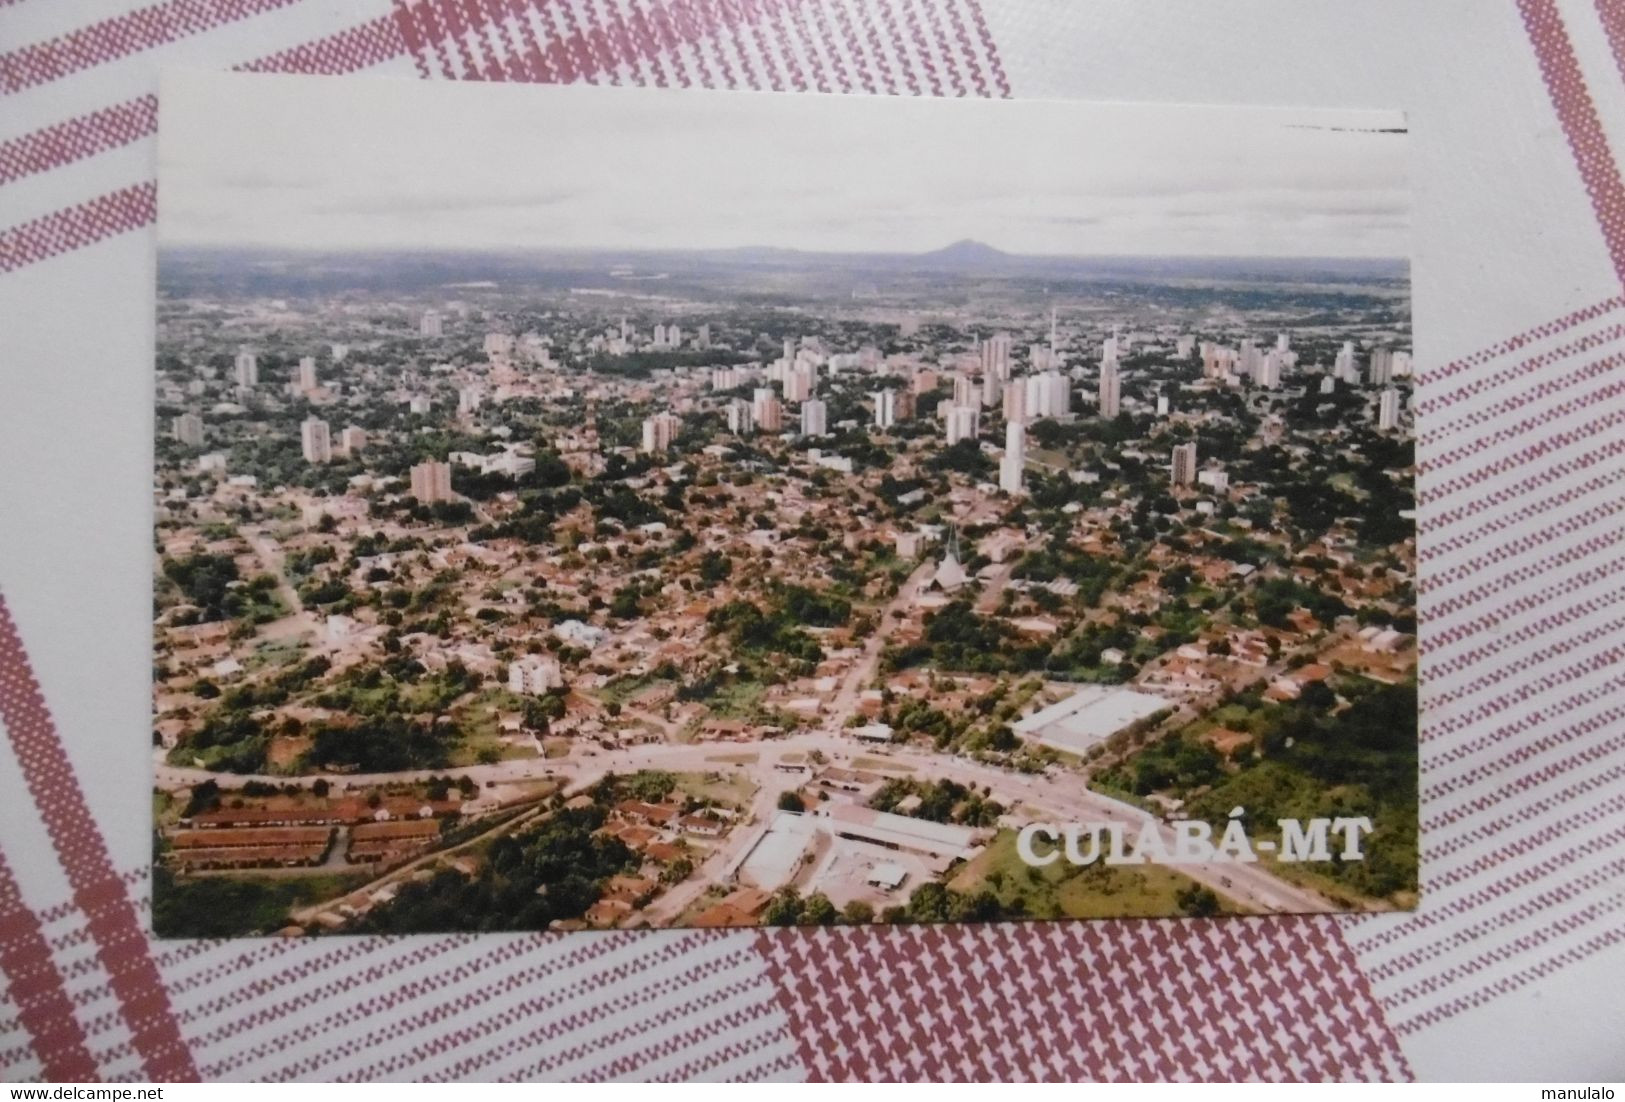 Mato Grosso Turistico - Cuiabat Mt - A Capital Do Estado - Cuiabá